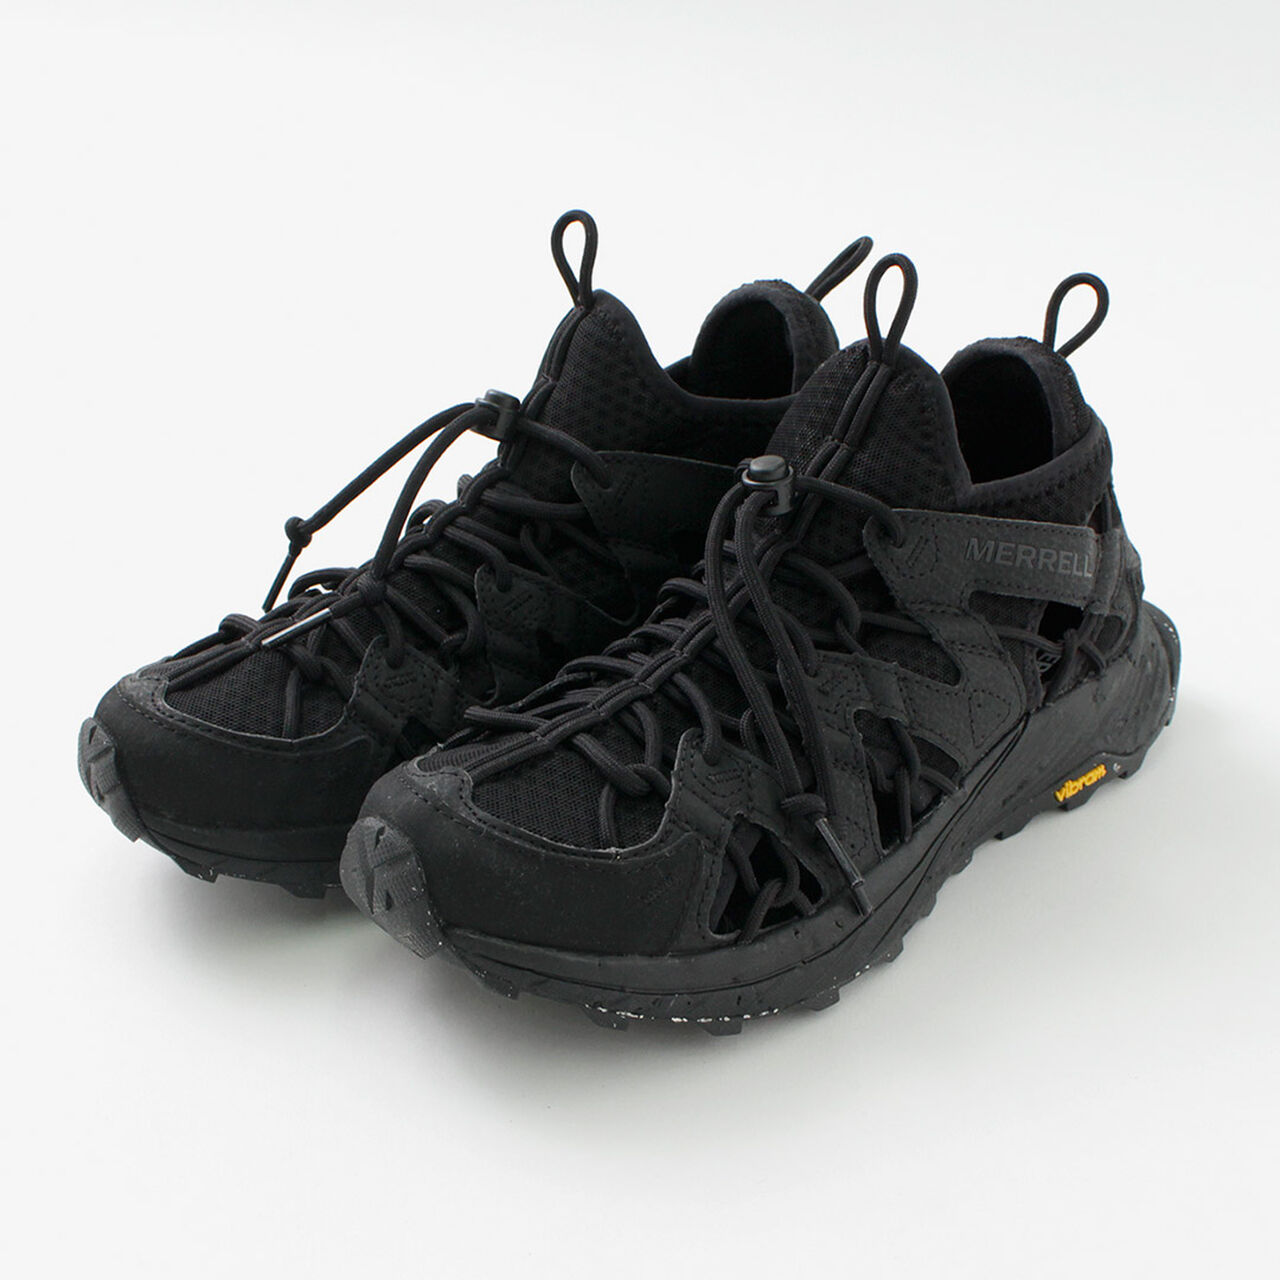 Moab Flight Sieve Shoes,Black, large image number 0